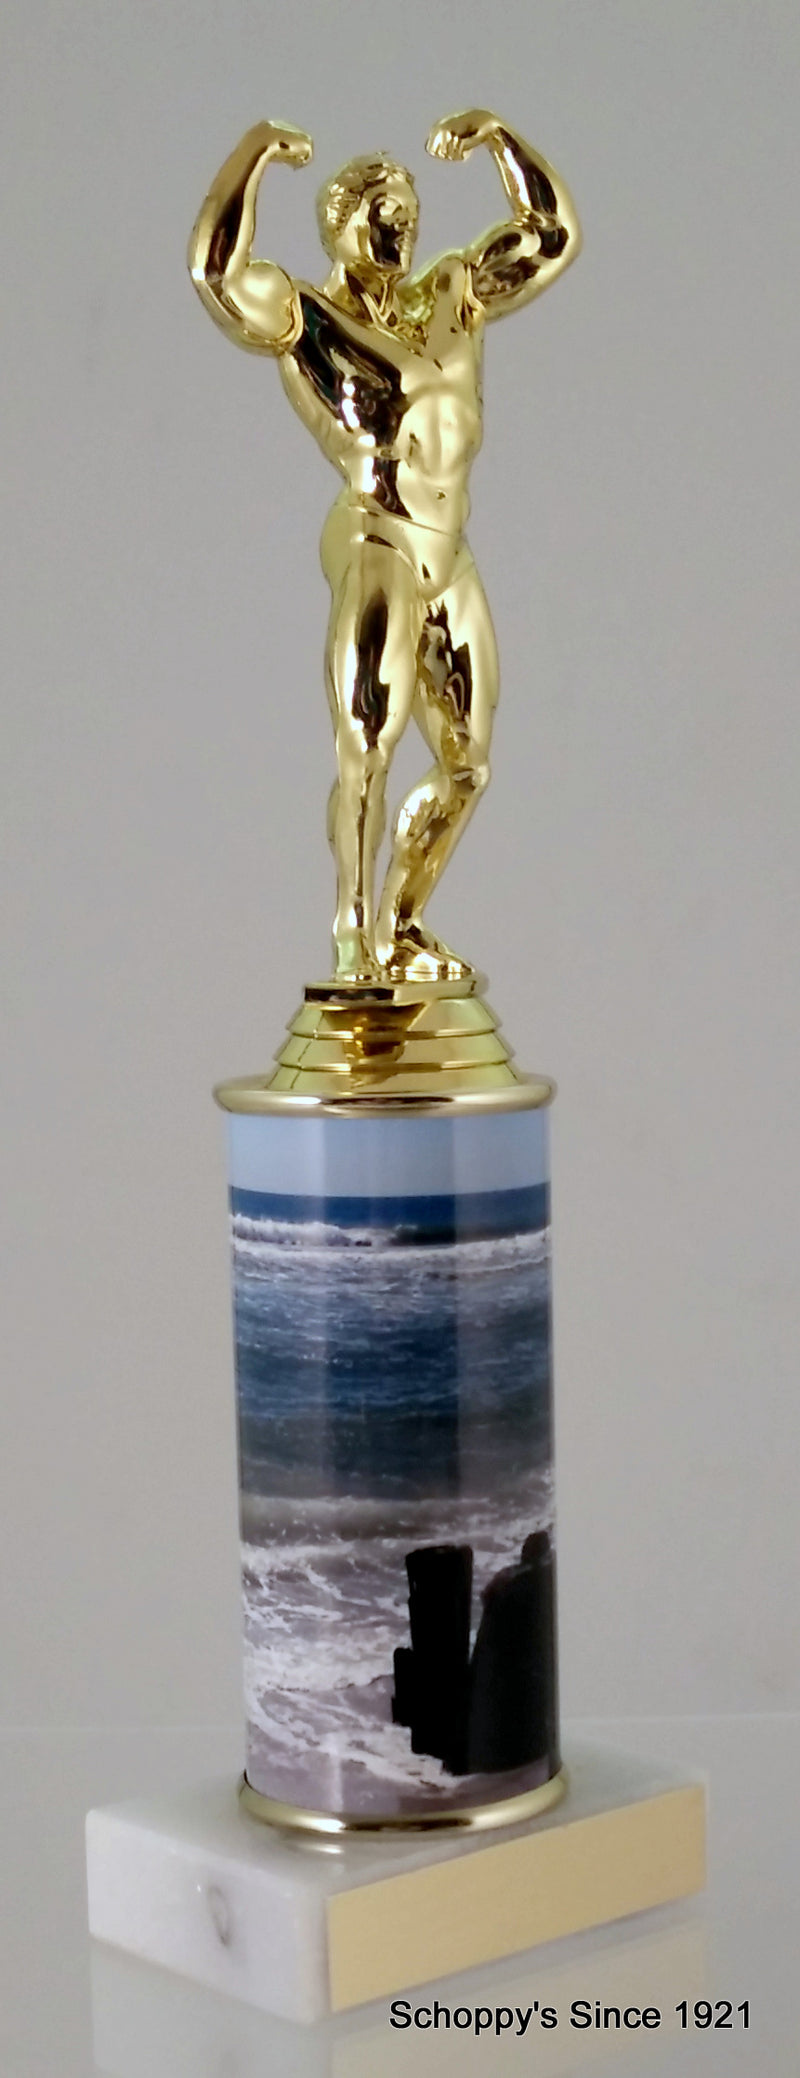 Body Builder Trophy With Beach Metal Column On Marble-Trophy-Schoppy&